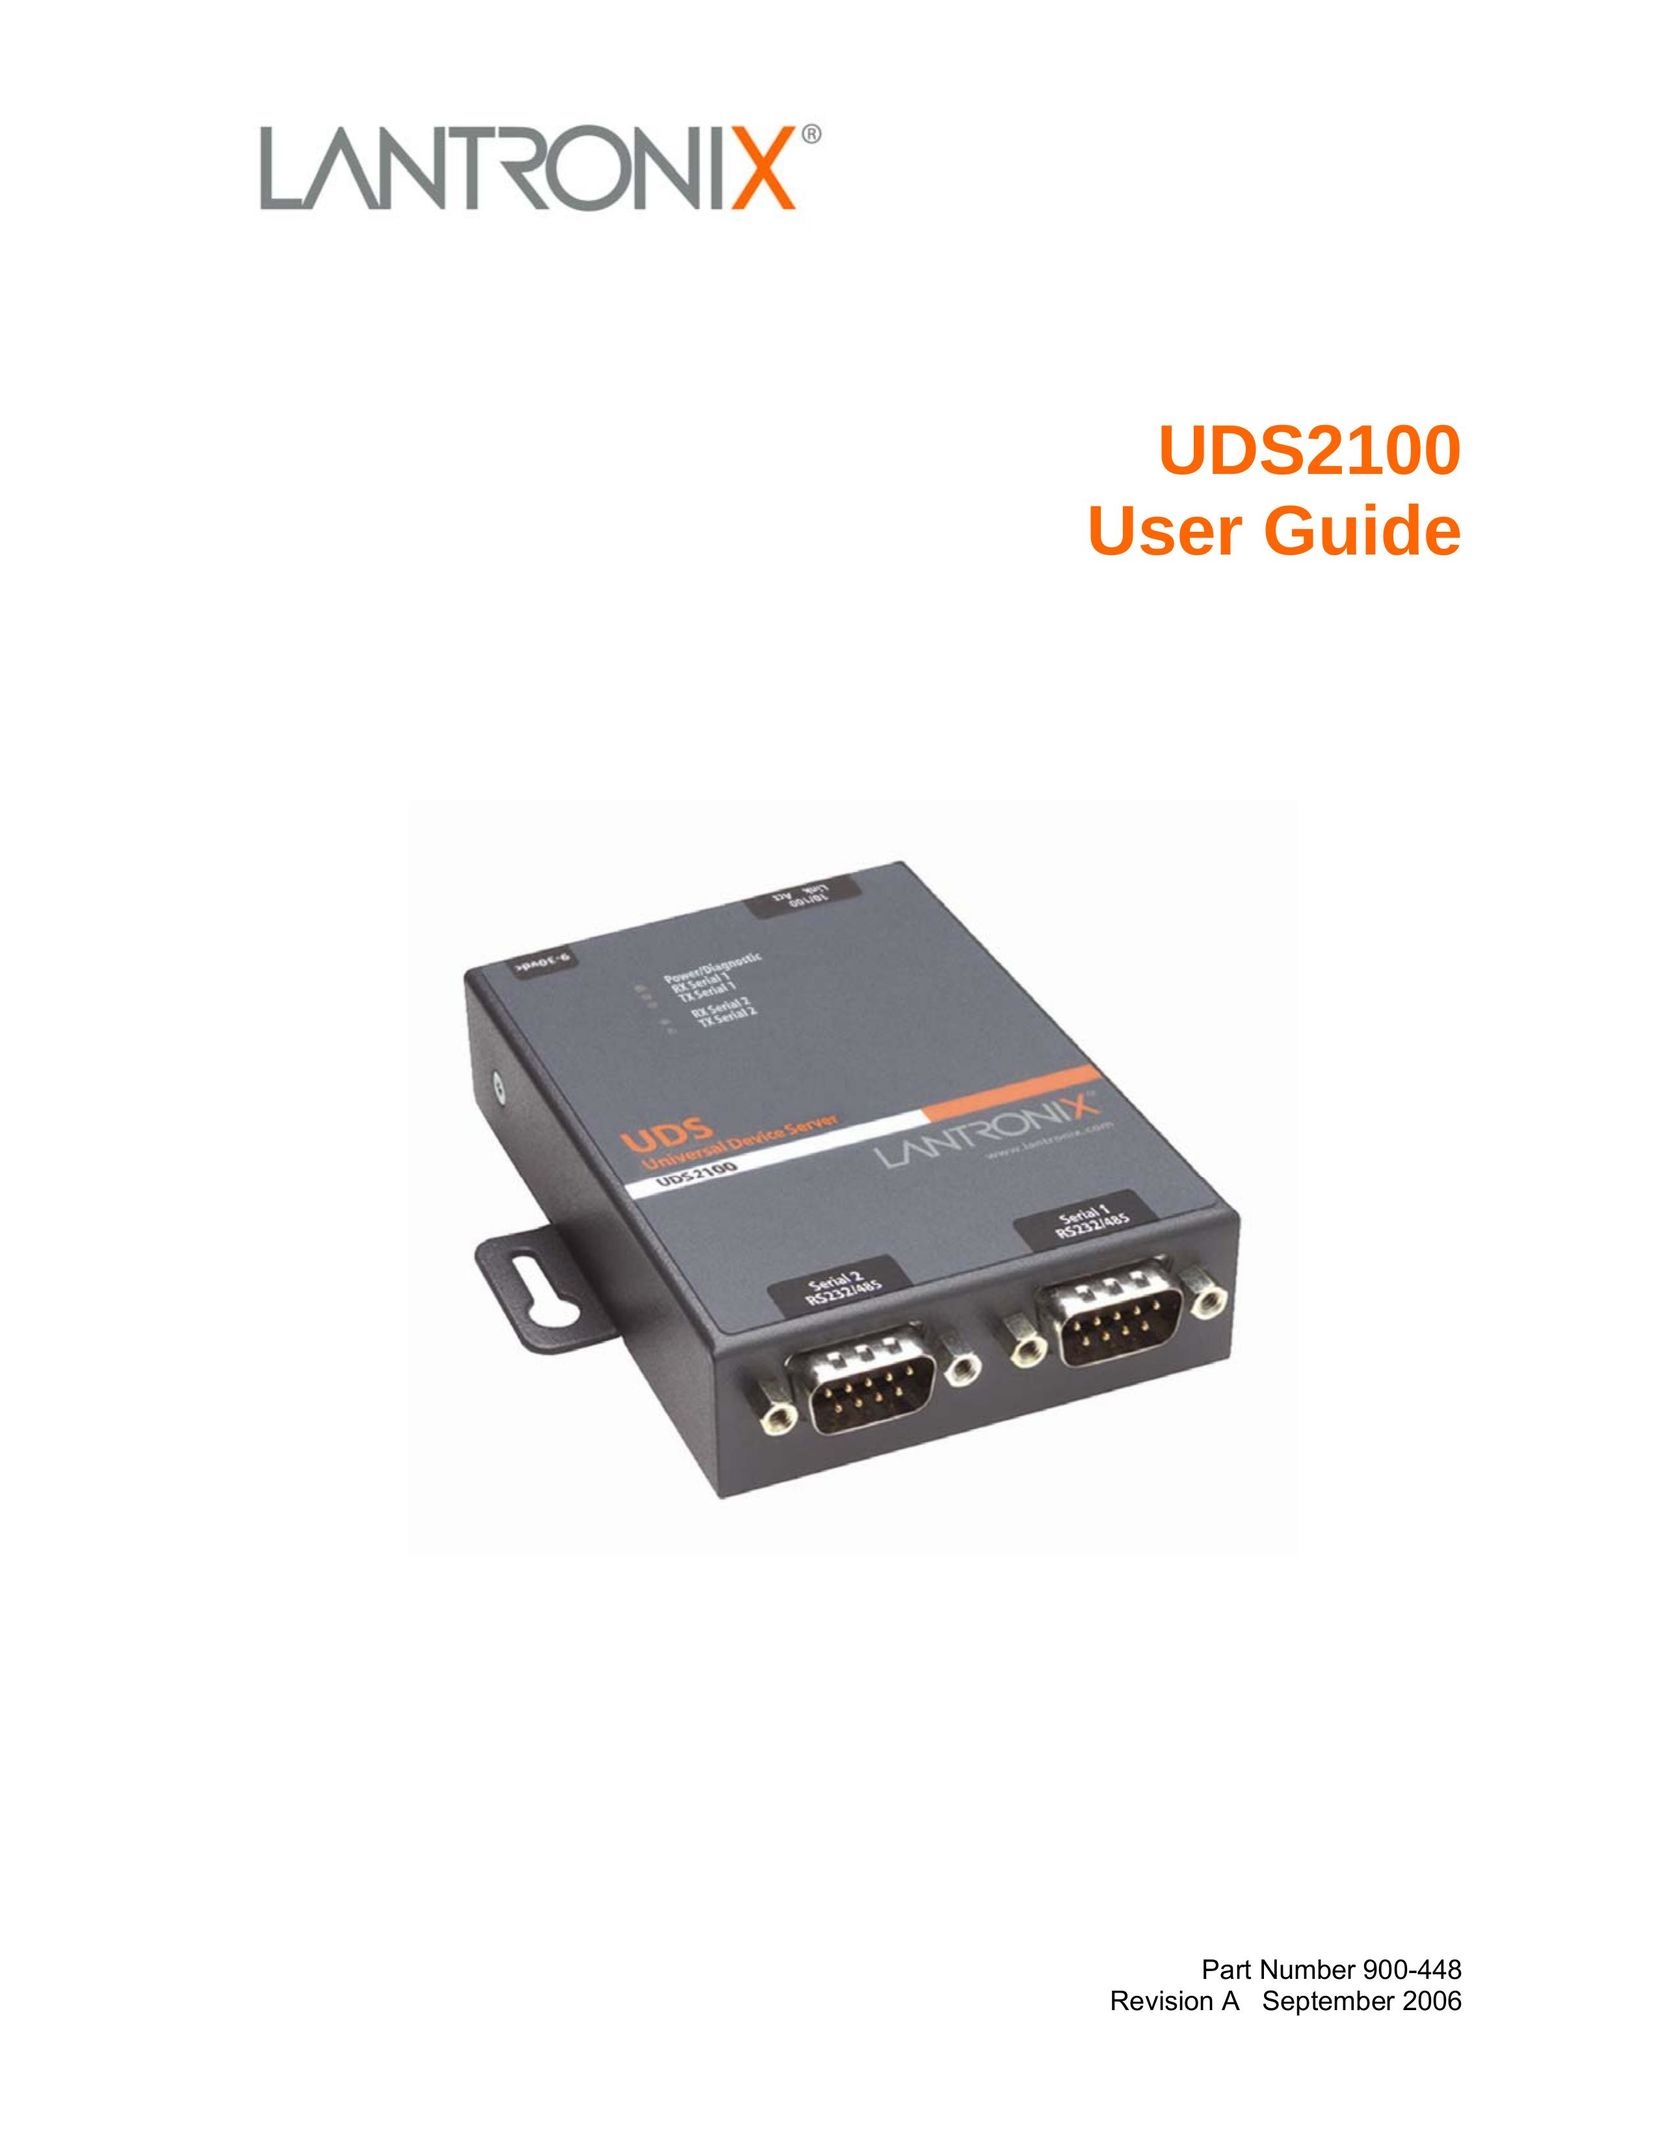 Lantronix UDS2100 Network Card User Manual